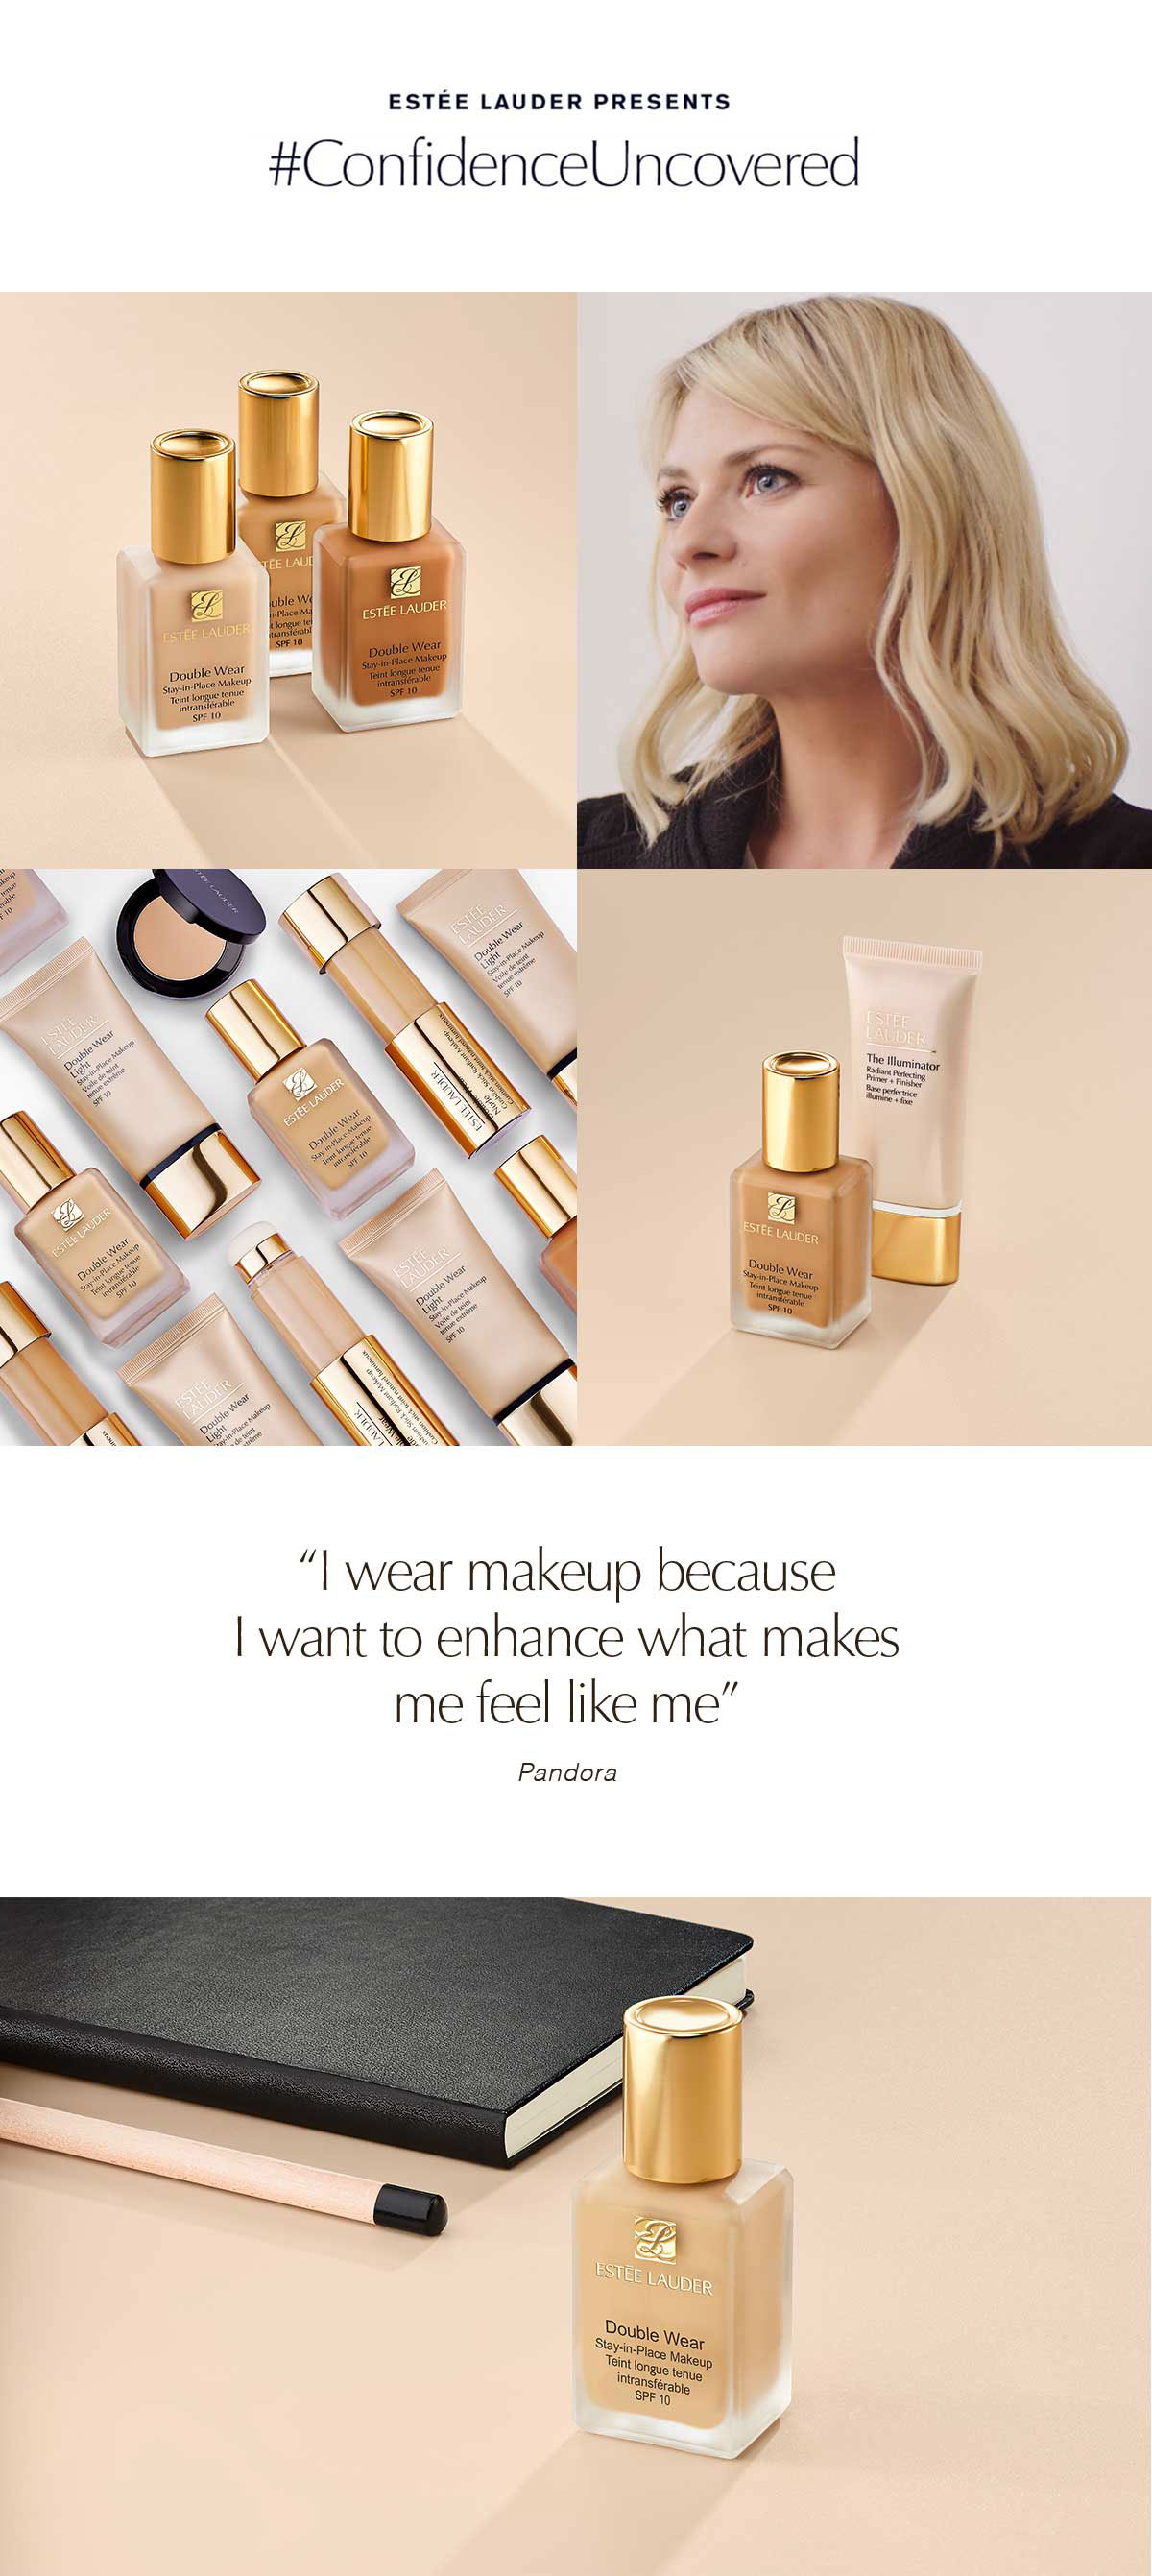 Double Wear foundation #confidenceuncovered Pandora Sykes Estee Lauder bloggers makeup influencers confidence female